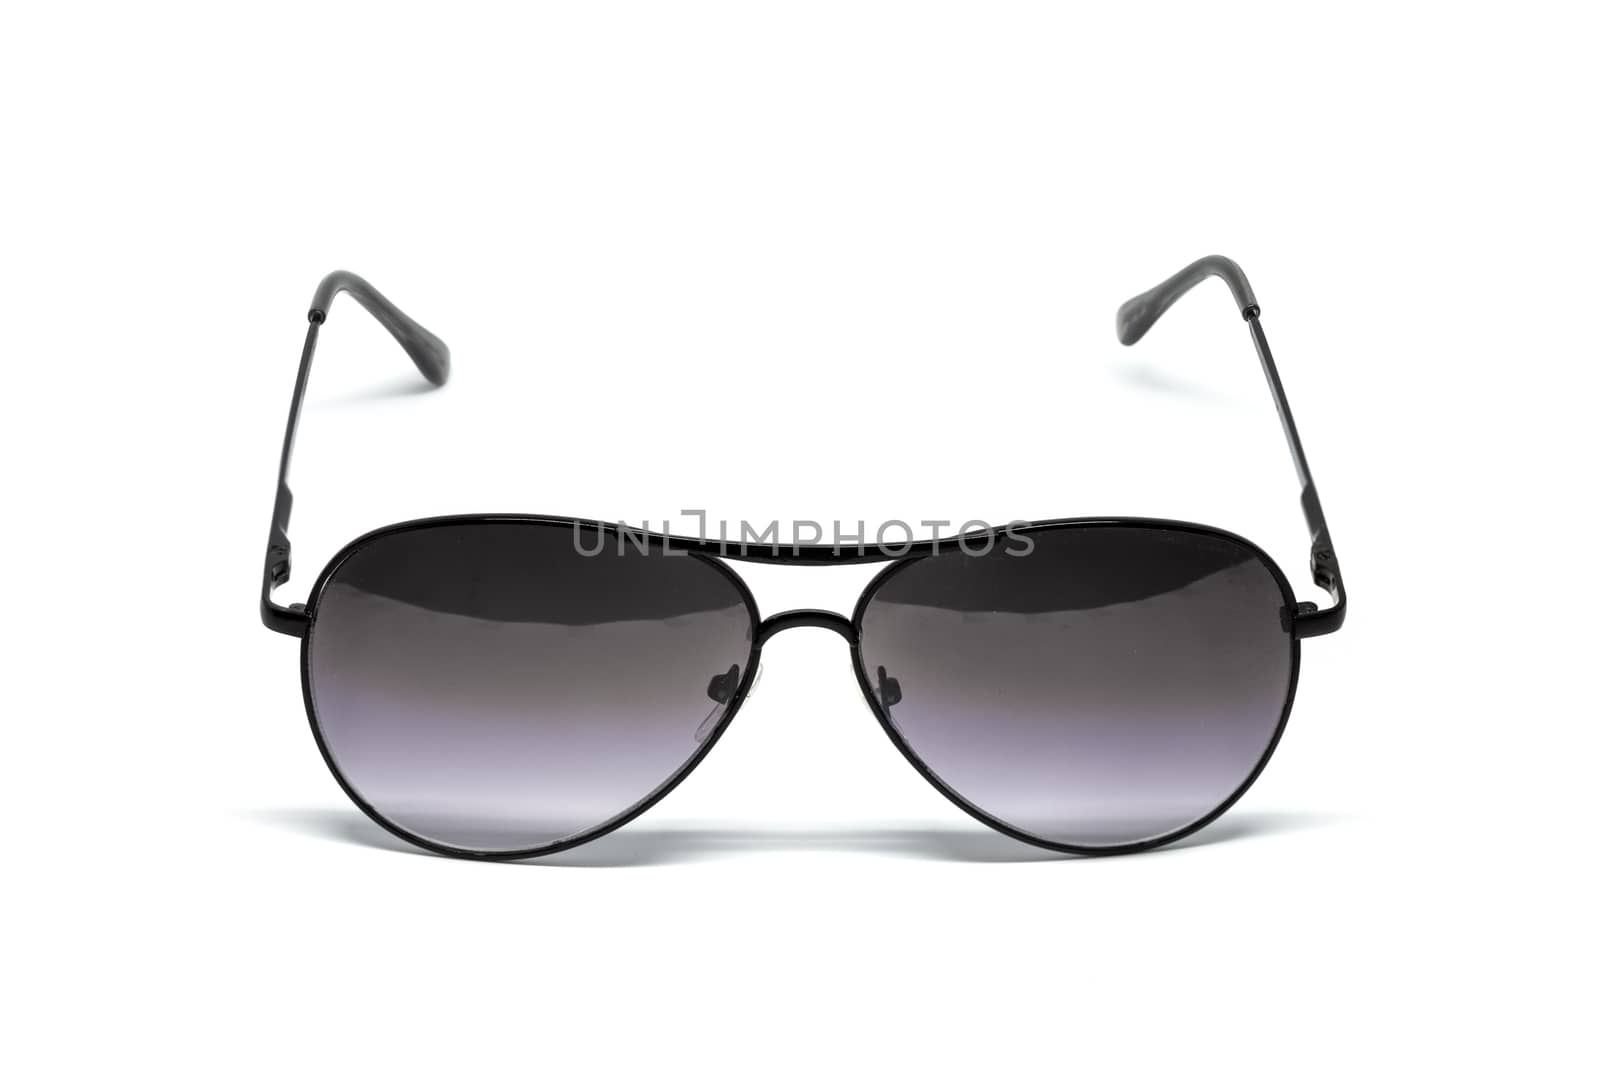 Black sunglasses  on white background